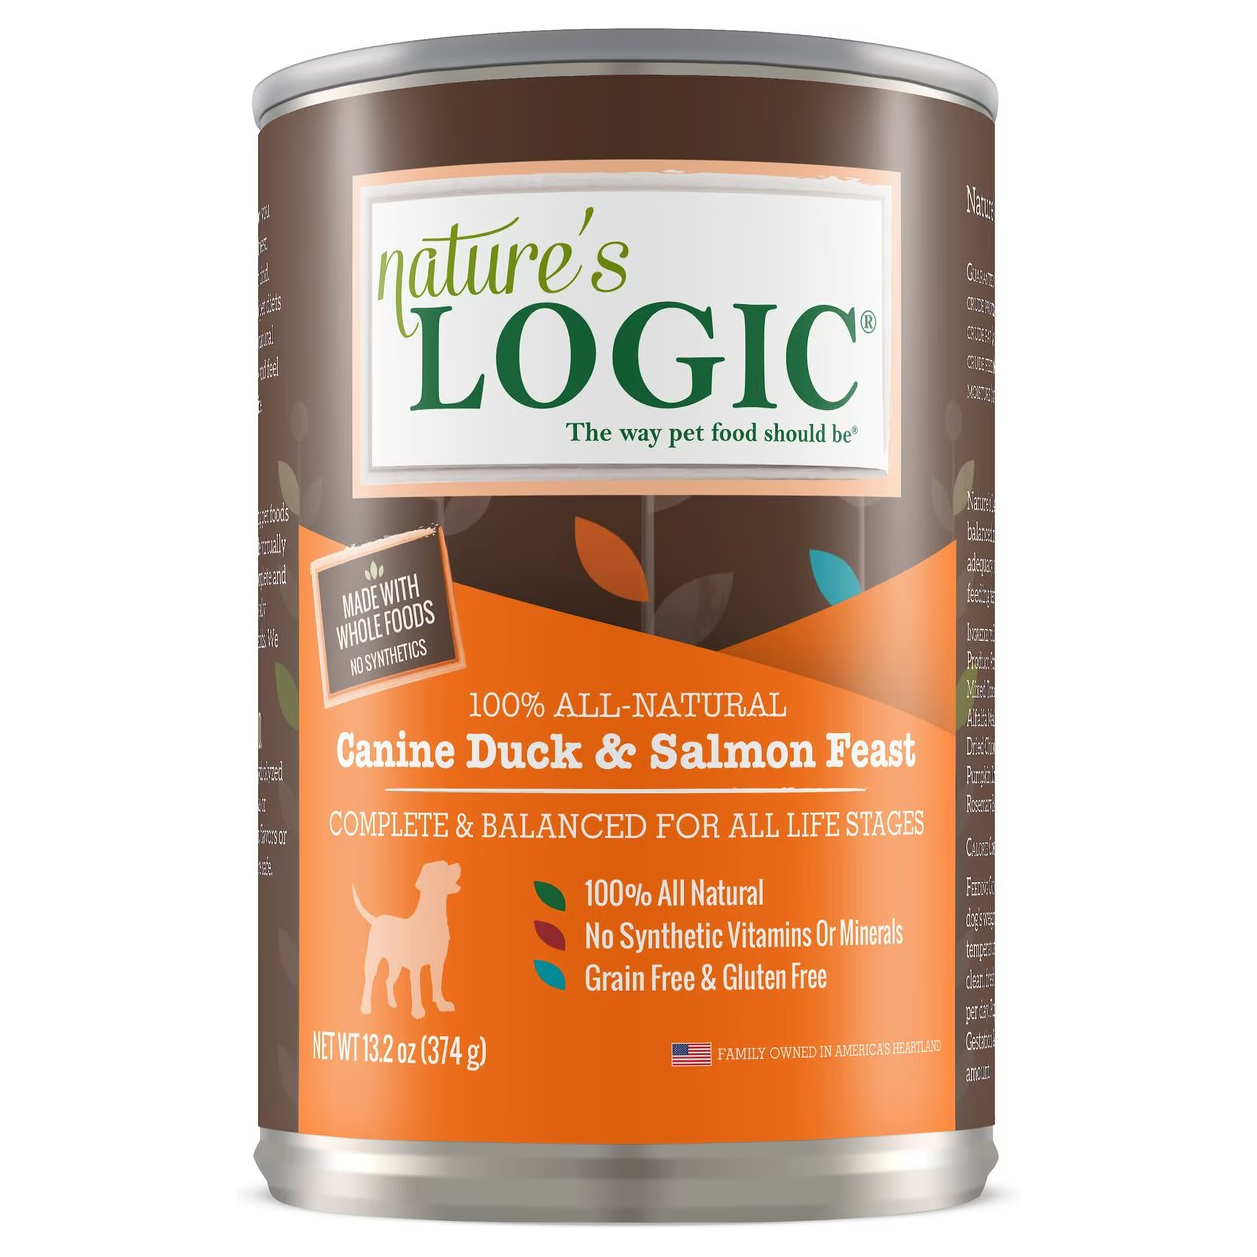 Nature's Logic Canine Canned Dog Food